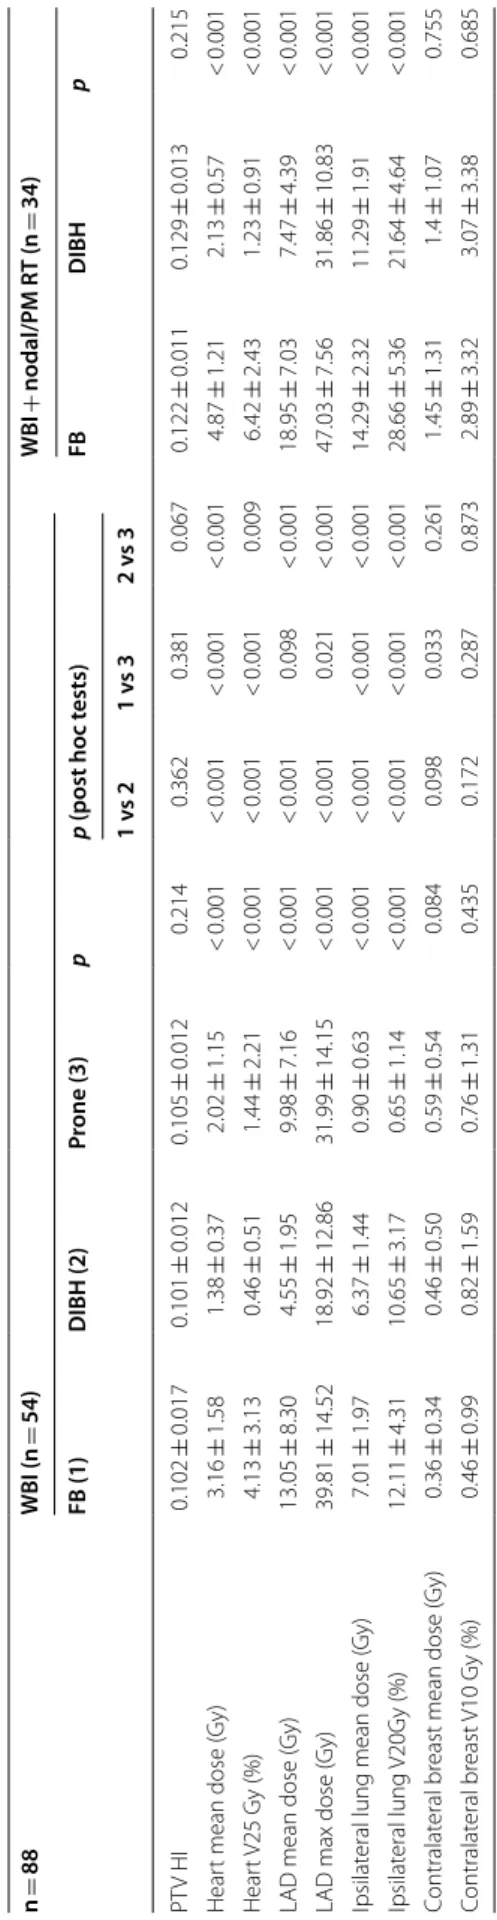 Table 1 Dosimetry data among patients treated with 3DCRT and DIBH n = 88WBI (n = 54)WBI + nodal/PM RT (n = 34) FB (1)DIBH (2)Prone (3)pp (post hoc tests)FBDIBHp 1 vs 21 vs 32 vs 3 PTV HI0.102 ± 0.0170.101 ± 0.0120.105 ± 0.0120.2140.3620.3810.0670.122 ± 0.0